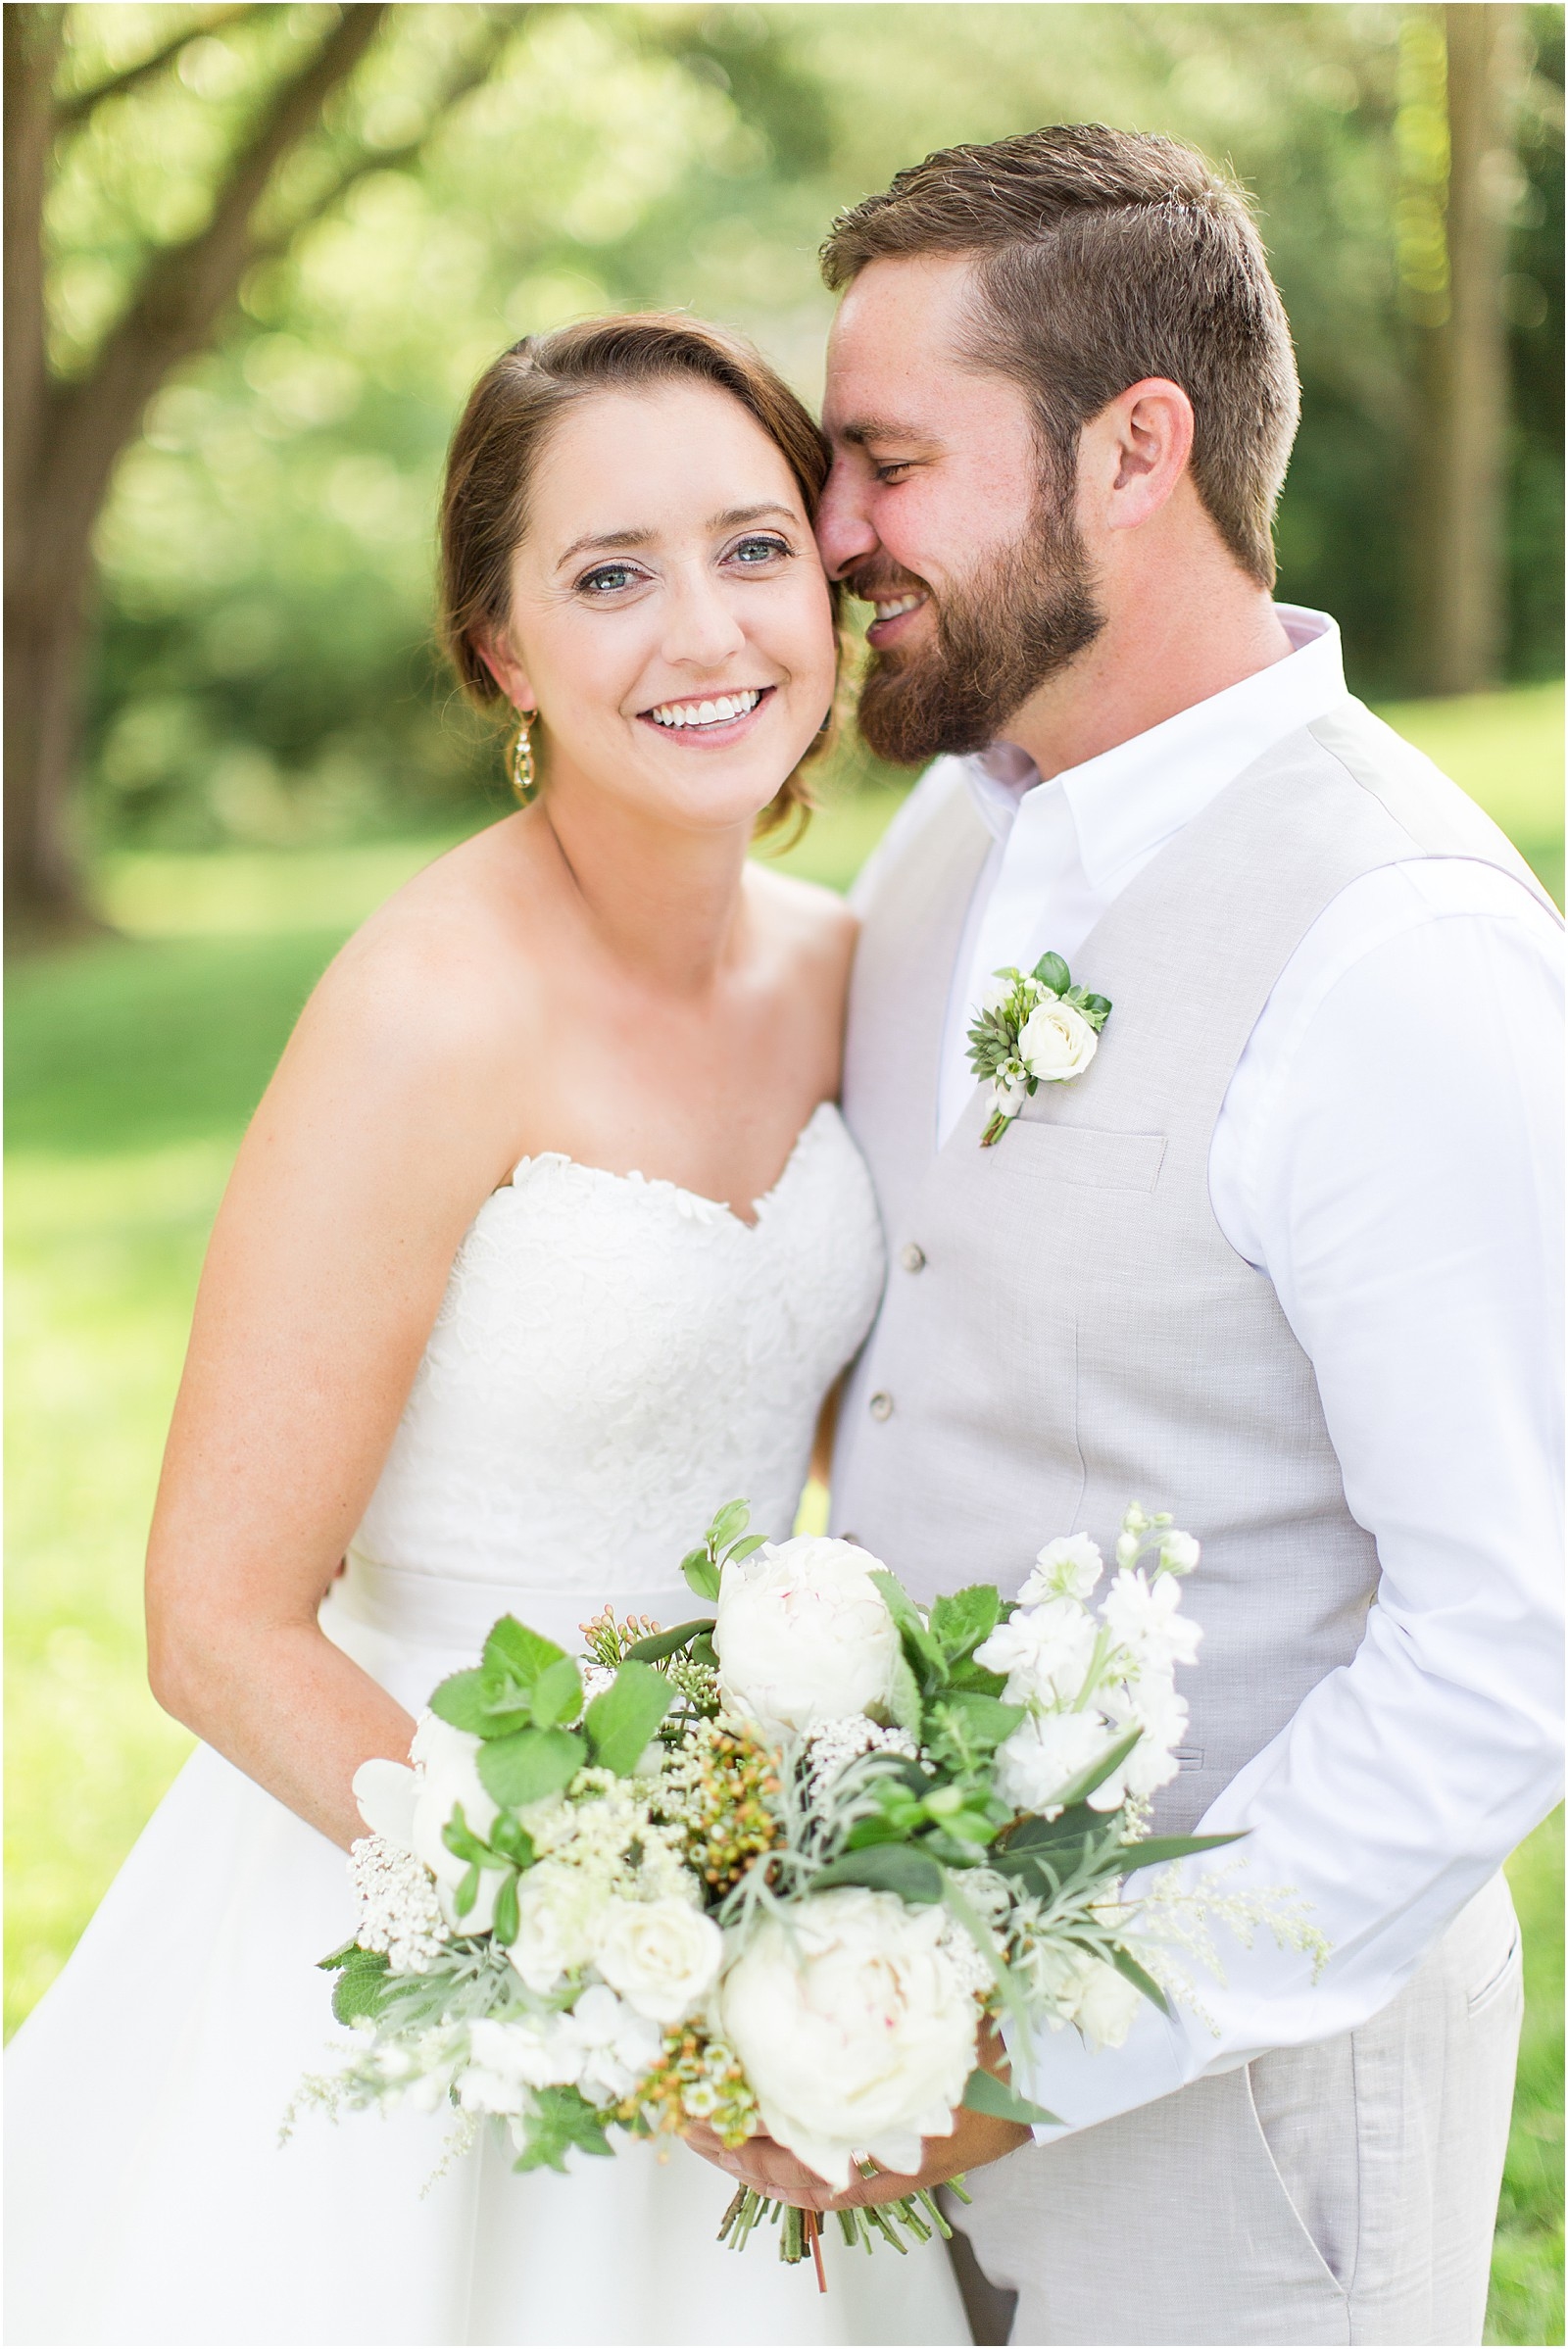 A Evansville Indiana Backyard Wedding | Bailey and Ben 039.jpg